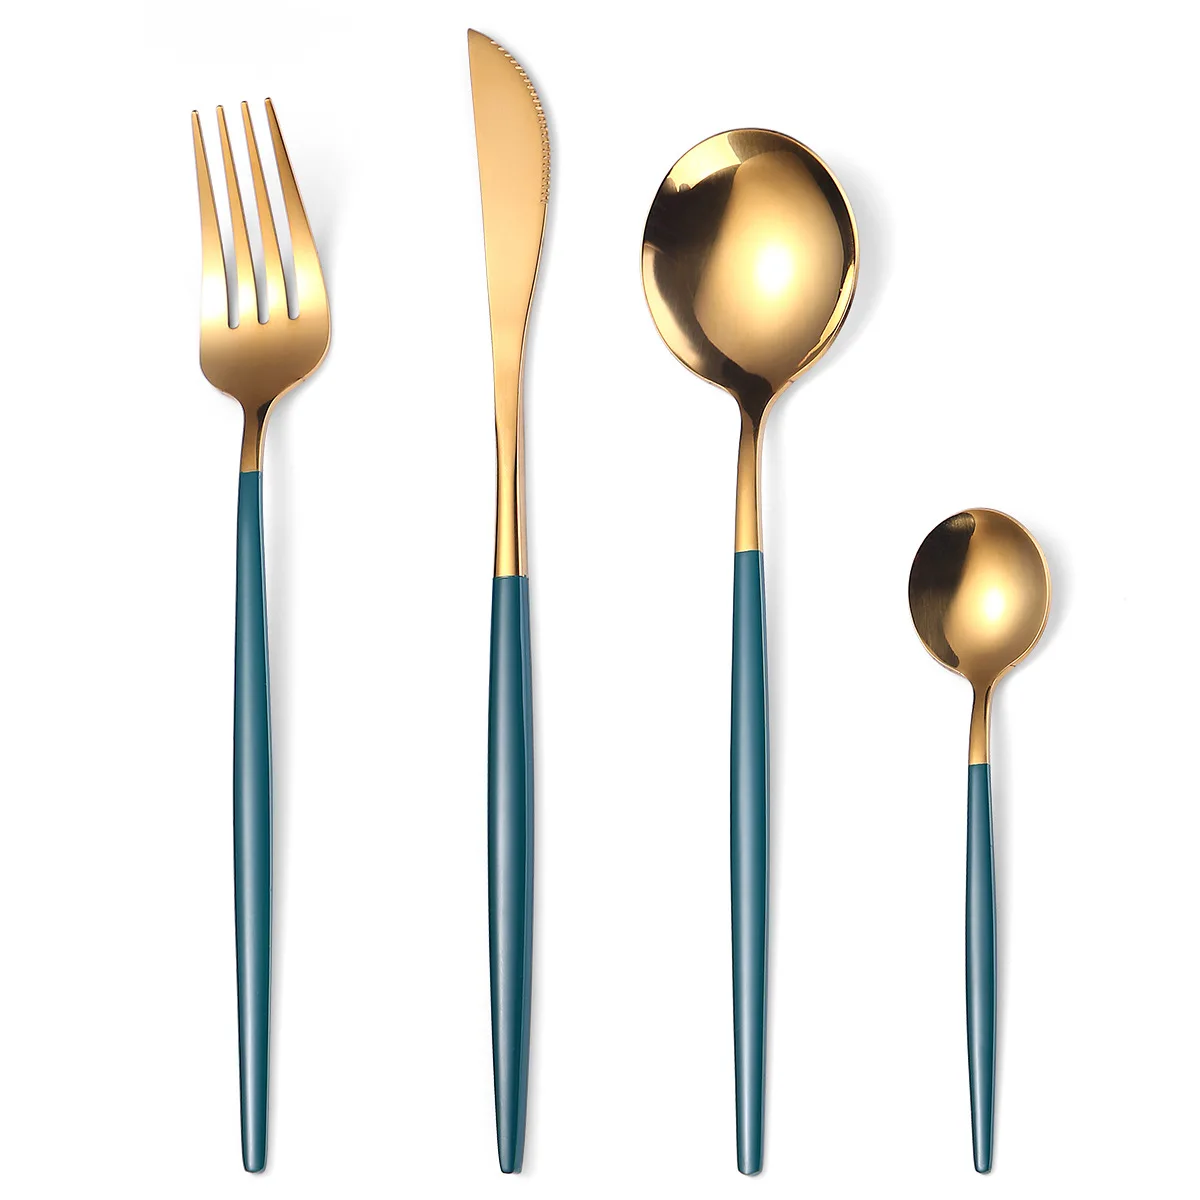 24Pcs/Set Black Gold Cutlery Set Upscale Home Tableware Set 304 Stainless Steel Dinnerware Set Knife Fork Spoon Dinner Service